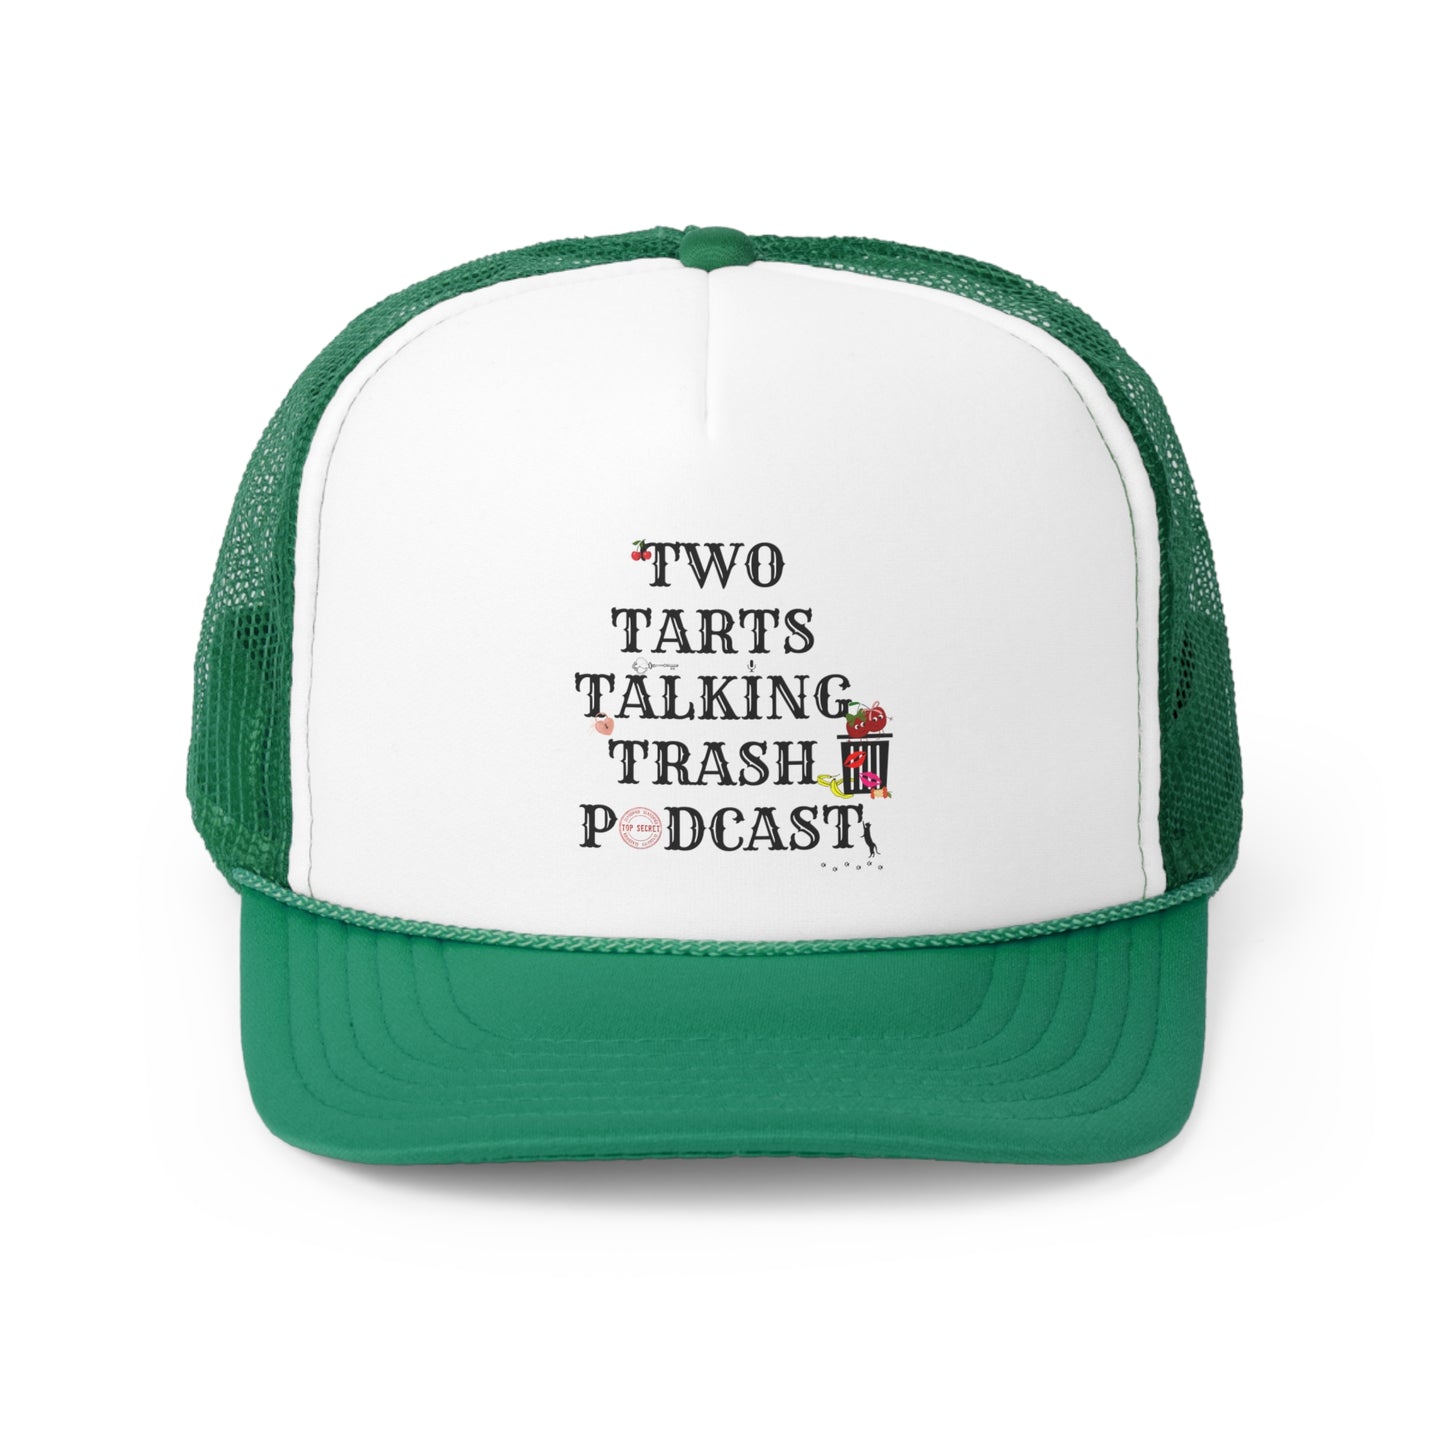 Two Tarts Talking Trash Podcast Cherries Trucker Caps